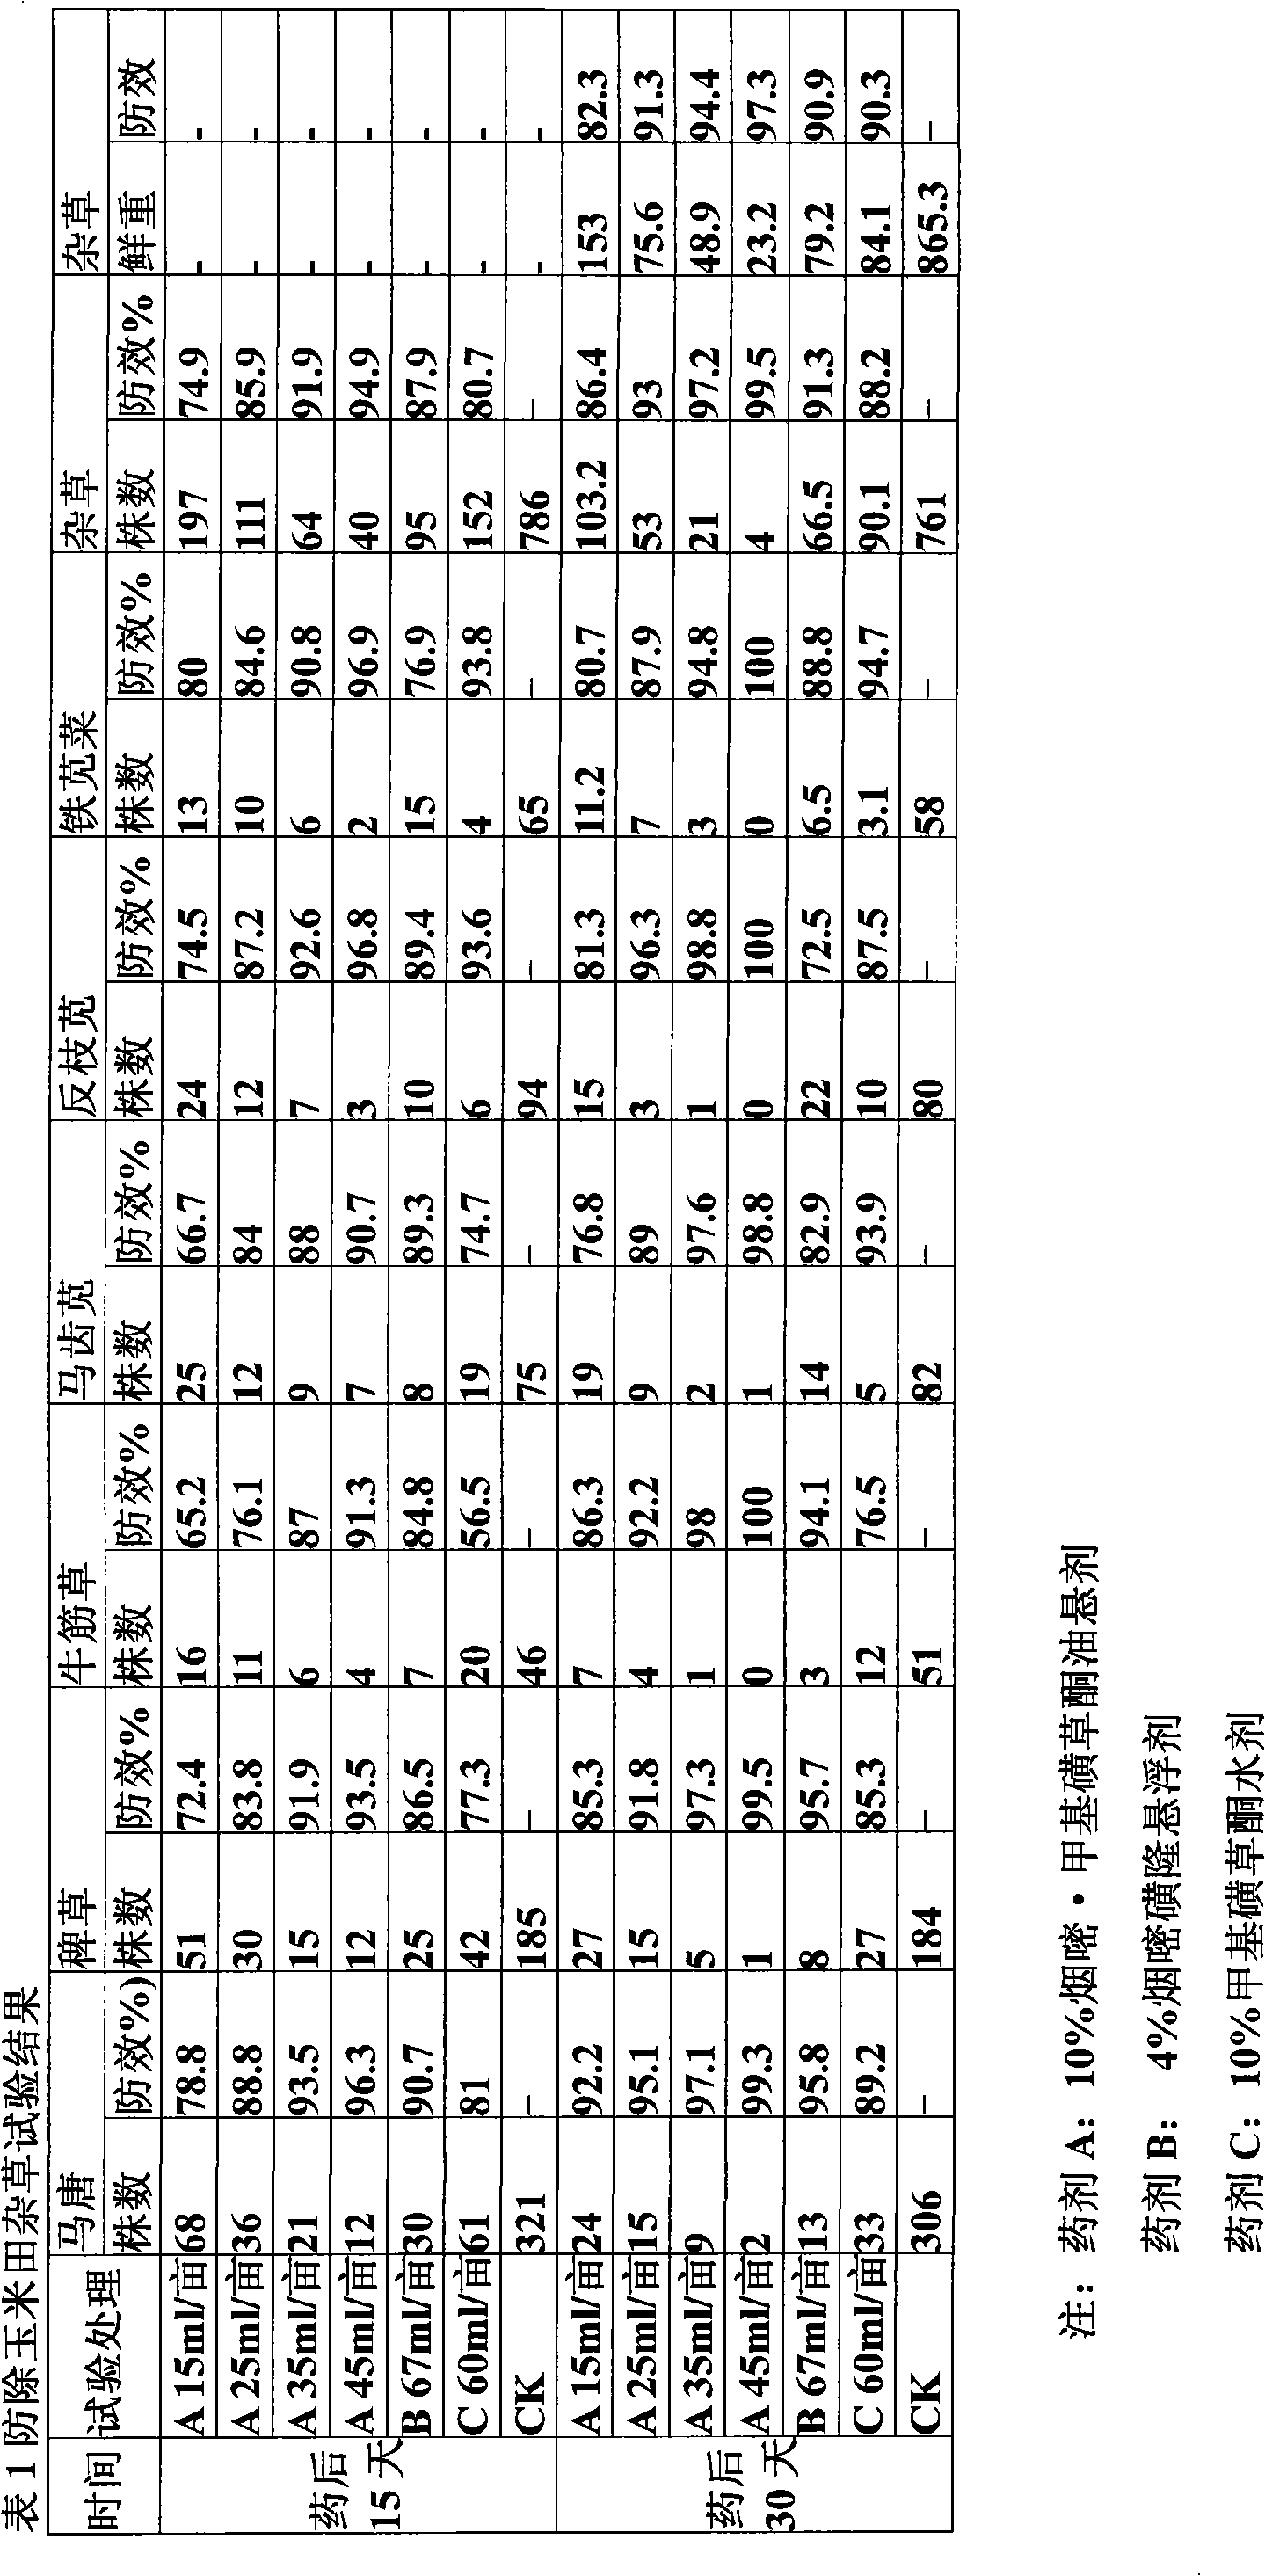 Herbicide composition containing mesotrione and nicosulfuron